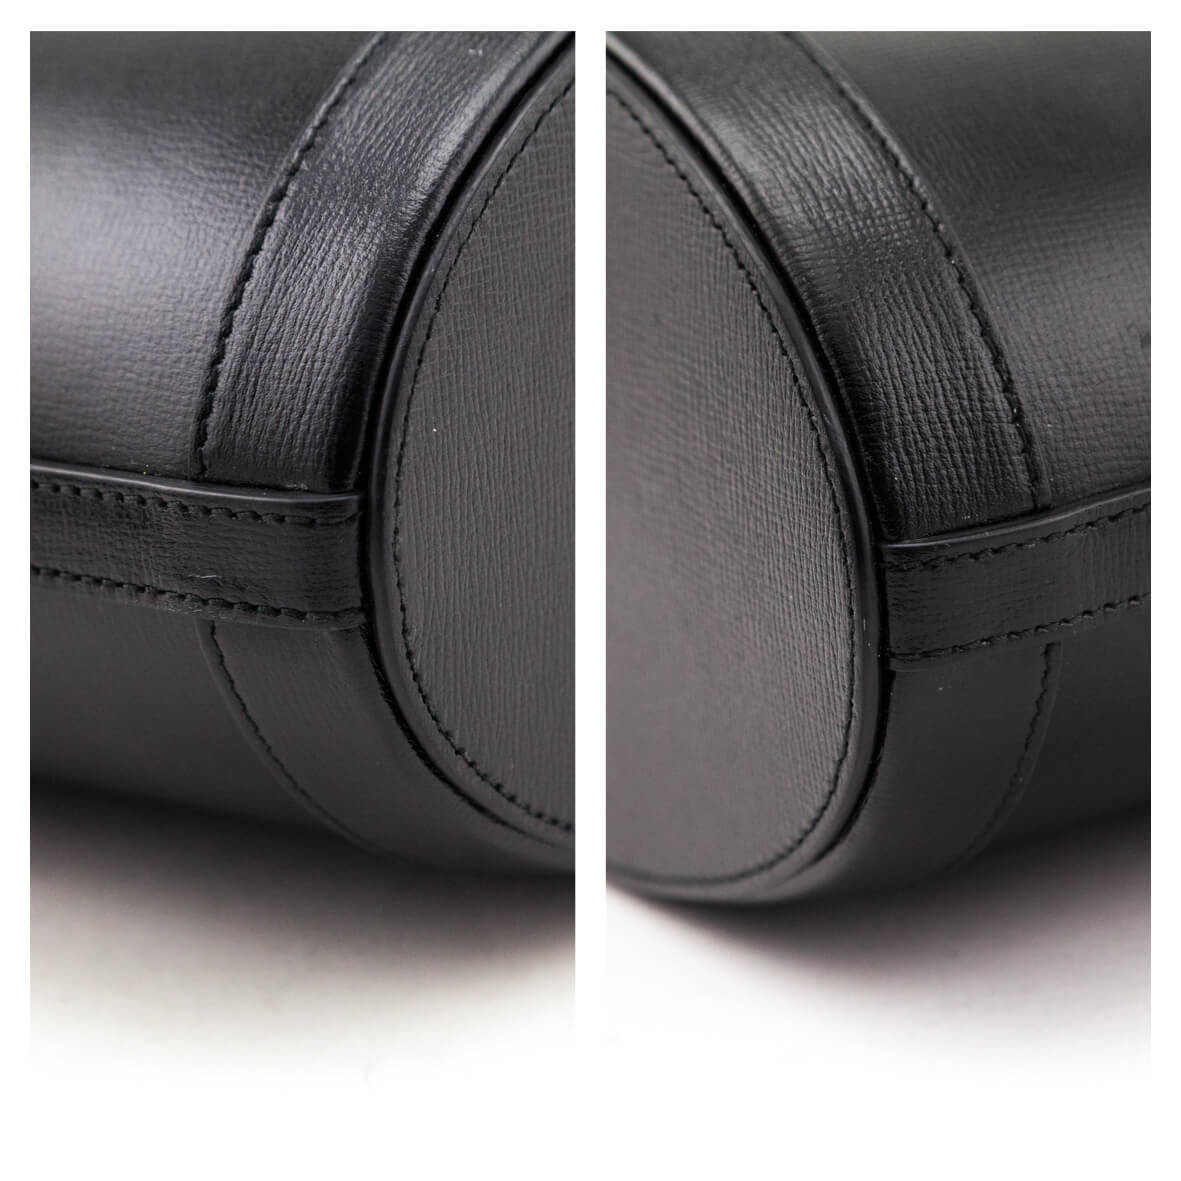 Gucci Black Calfskin Horsebit 1955 Drawstring Bucket Bag - Love that Bag etc - Preowned Authentic Designer Handbags & Preloved Fashions